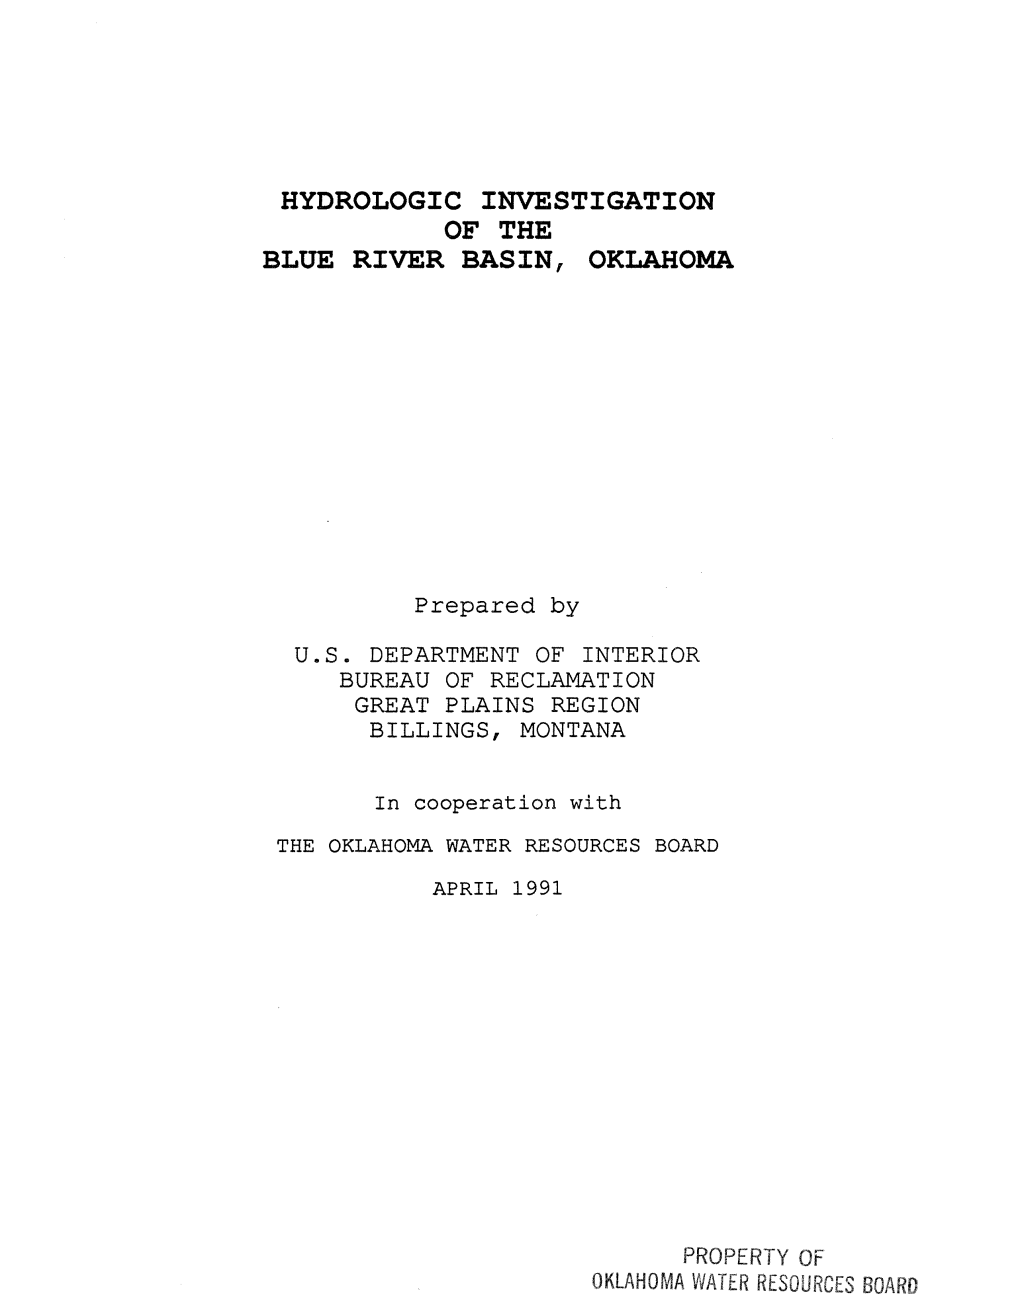 TR91-2: Hydrologic Investigation of the Blue River Basin